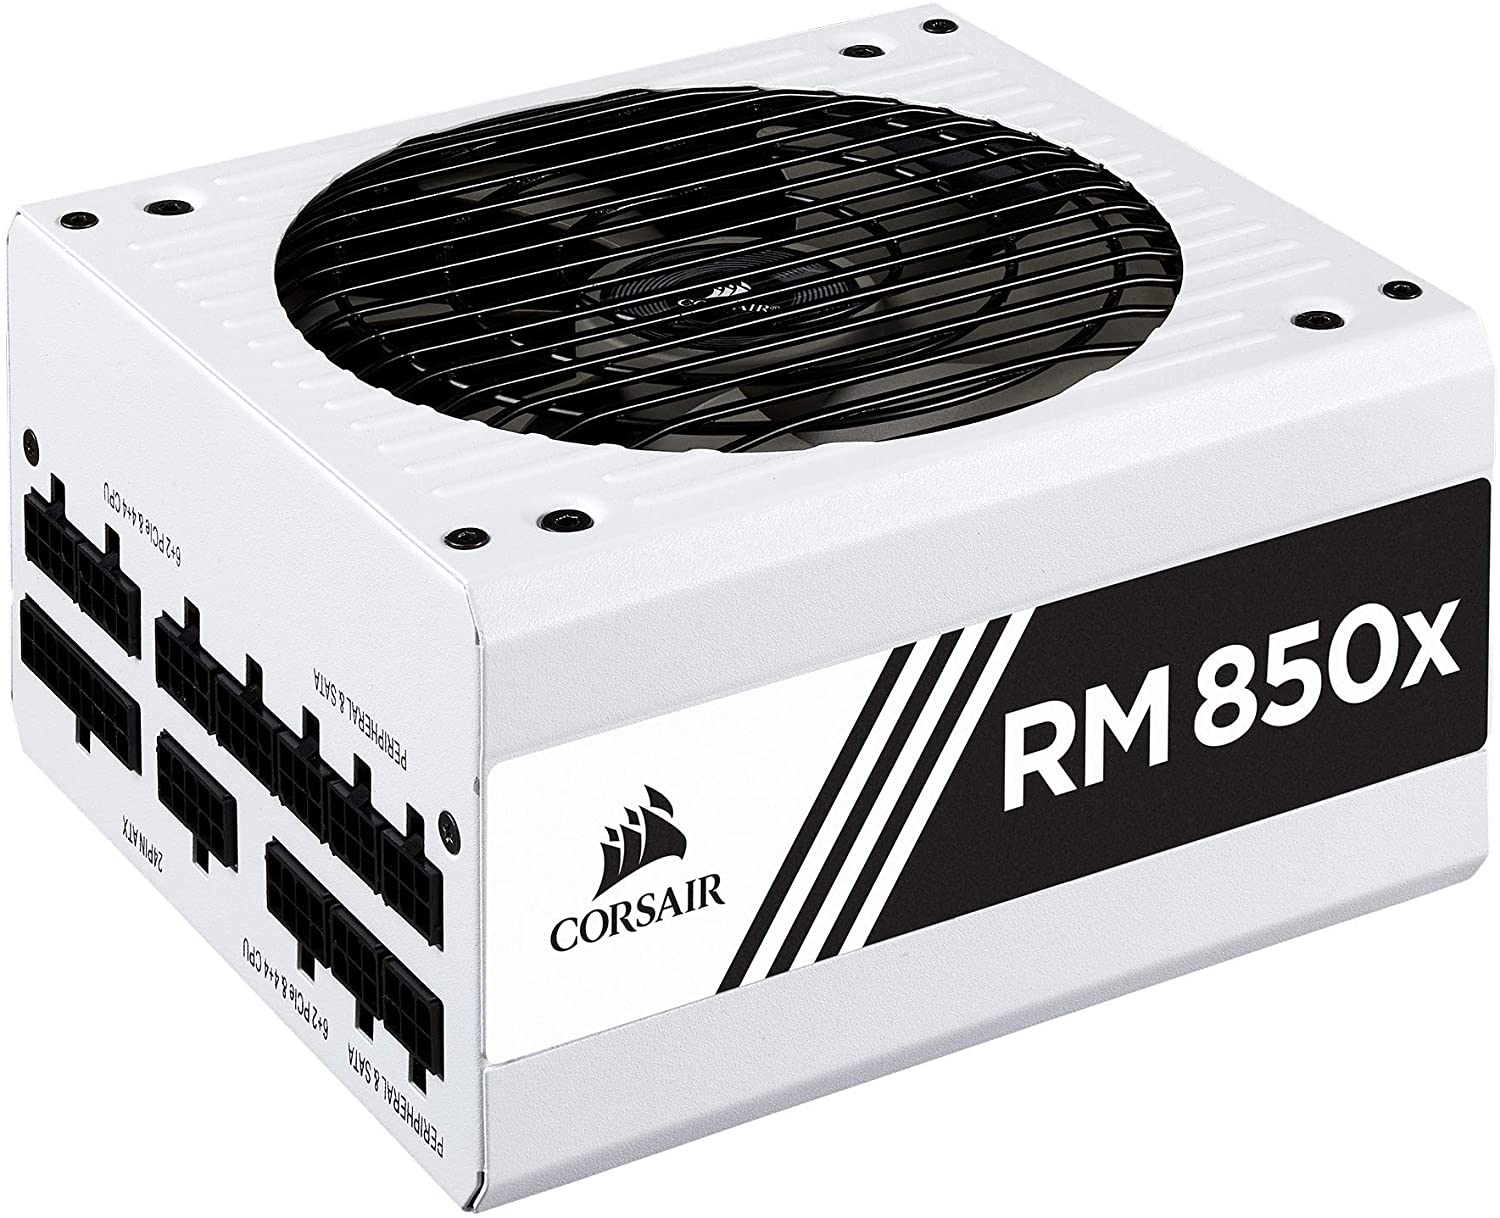 Corsair RMX White Series (2018), RM850x, 850 Watt, 80+ Gold Certified, Fully Modular Power Supply - White, 80 PLUS Gold - $110 at Amazon